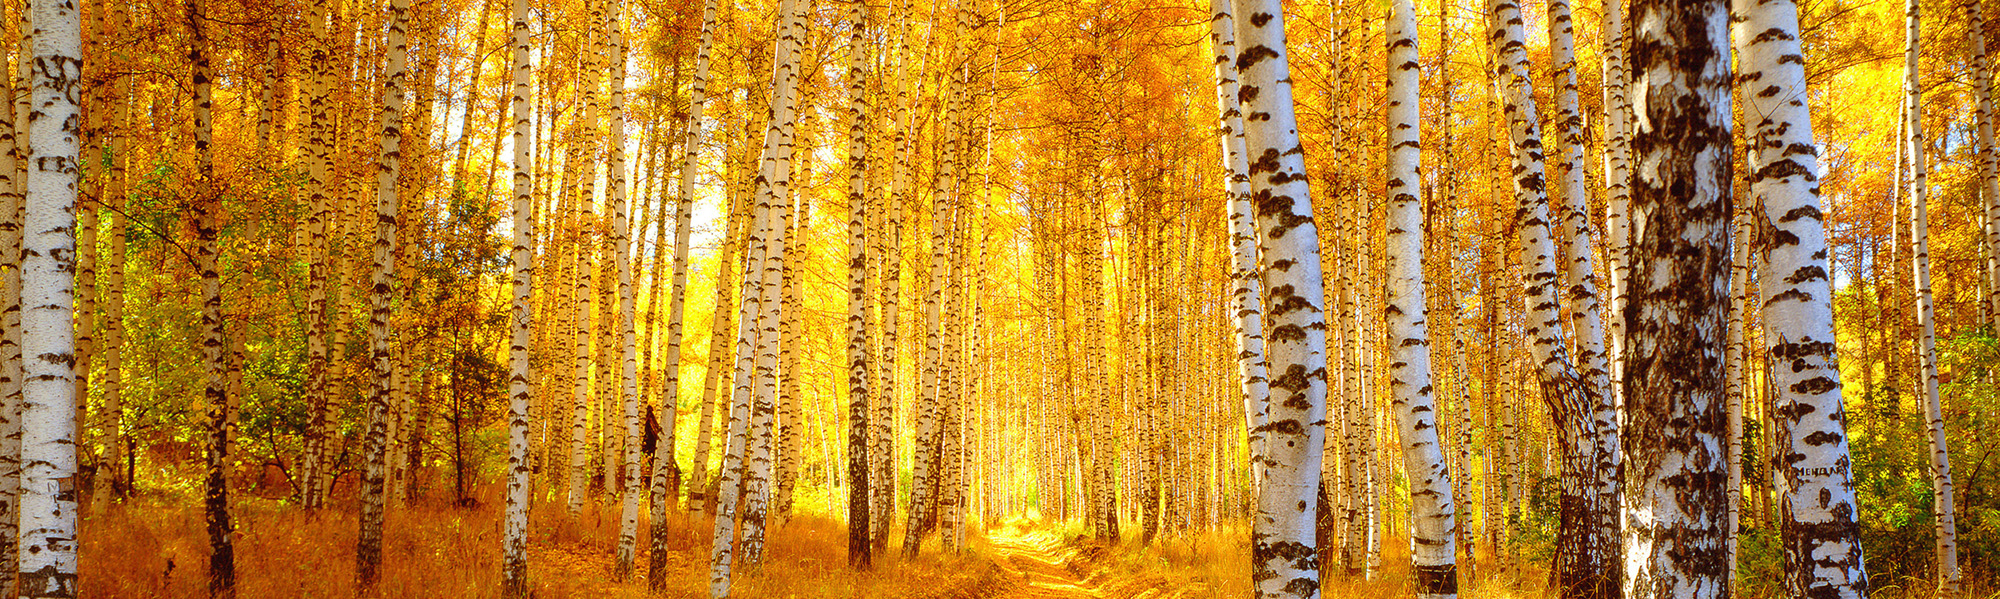 Autumn Aspen forest